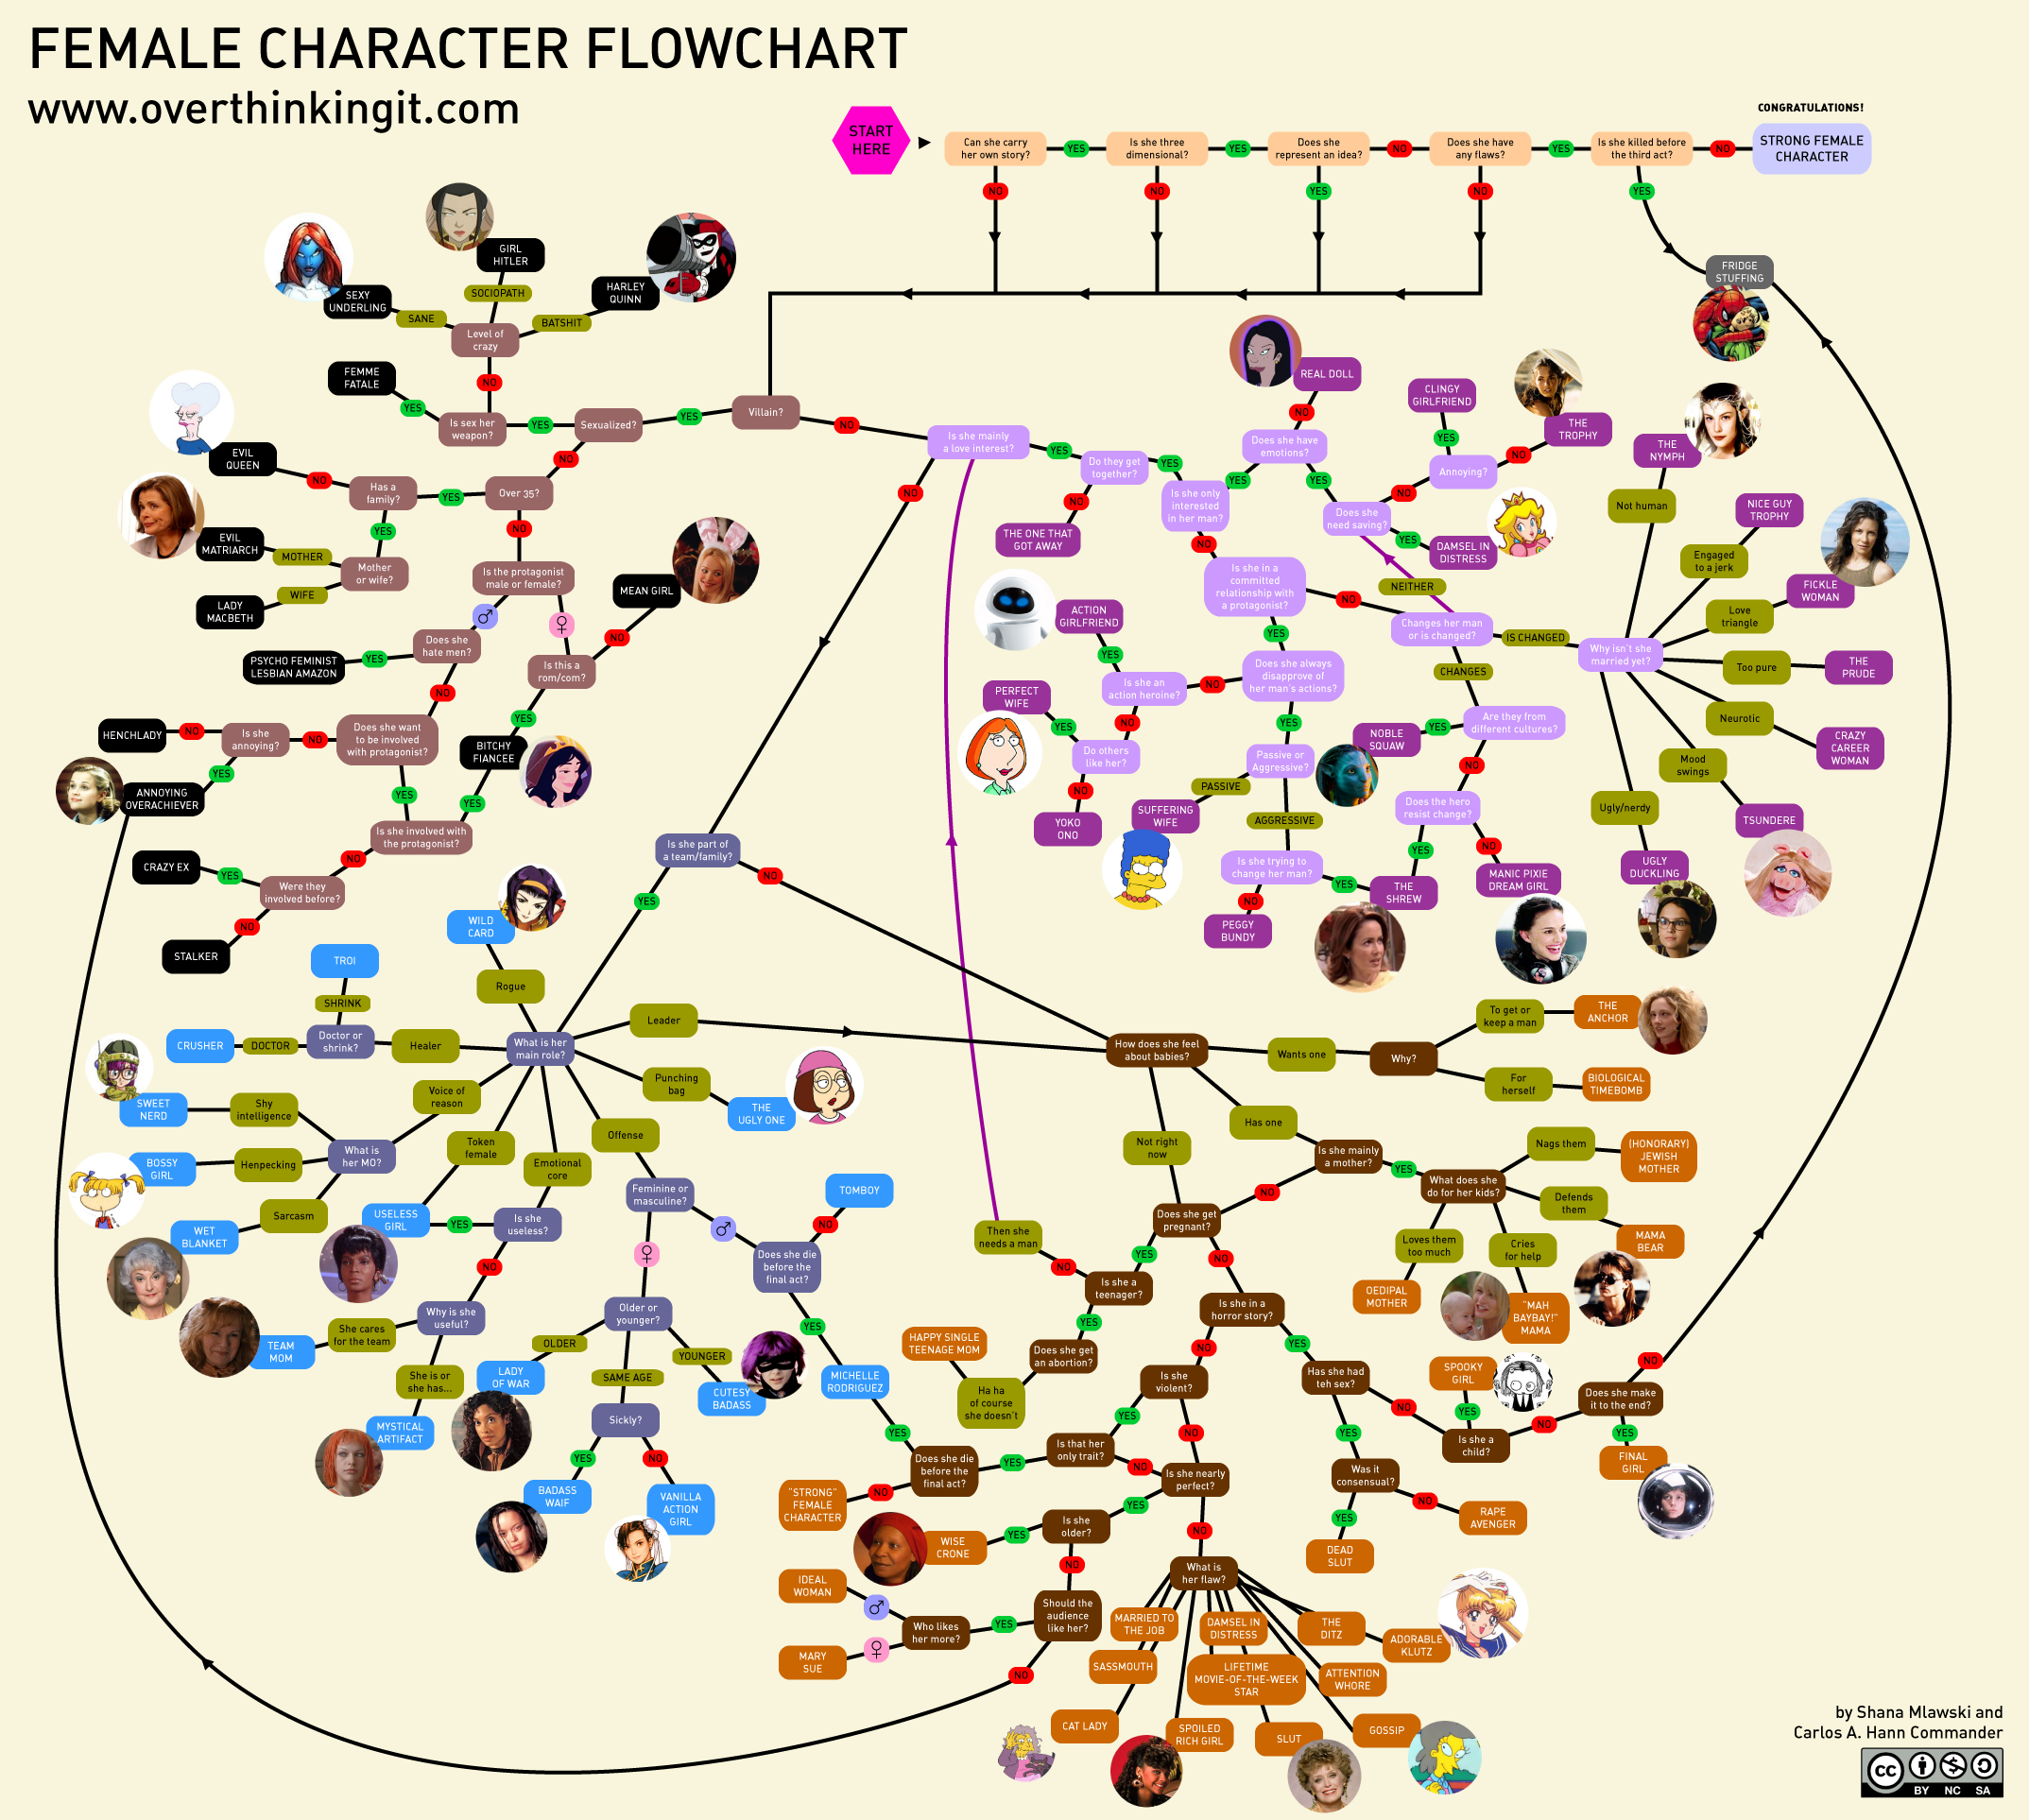 Female Charakter Flowchart. © und Quelle: www.overthinkingit.com/2010/10/11/female-character-flowchart/